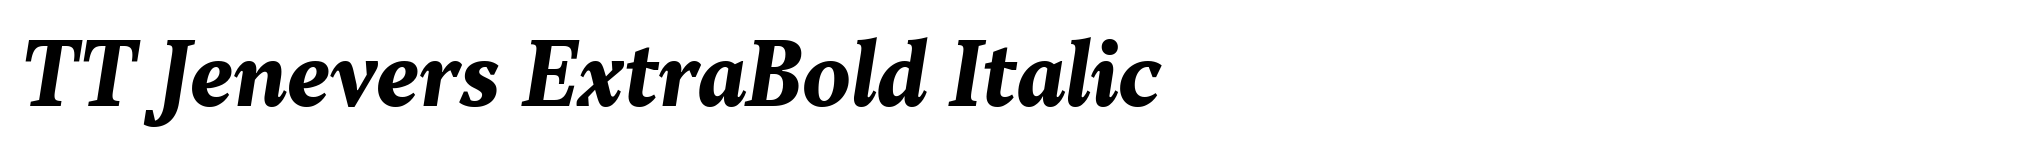 TT Jenevers ExtraBold Italic image